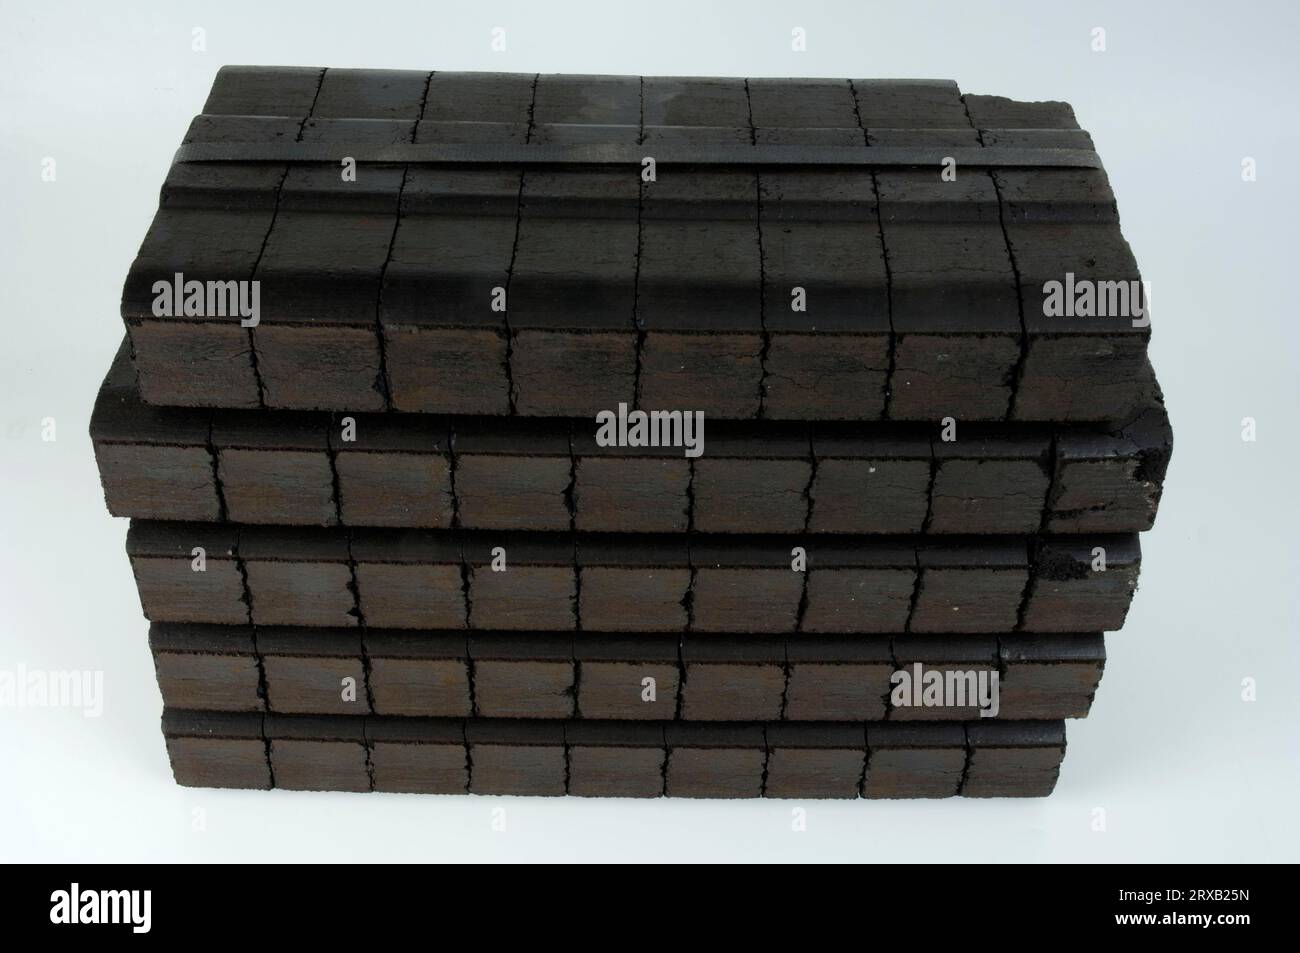 https://c8.alamy.com/comp/2RXB25N/lignite-briquettes-brown-coal-lignite-brickett-coal-coal-bricketts-coal-energy-fossil-fuels-exempt-object-2RXB25N.jpg